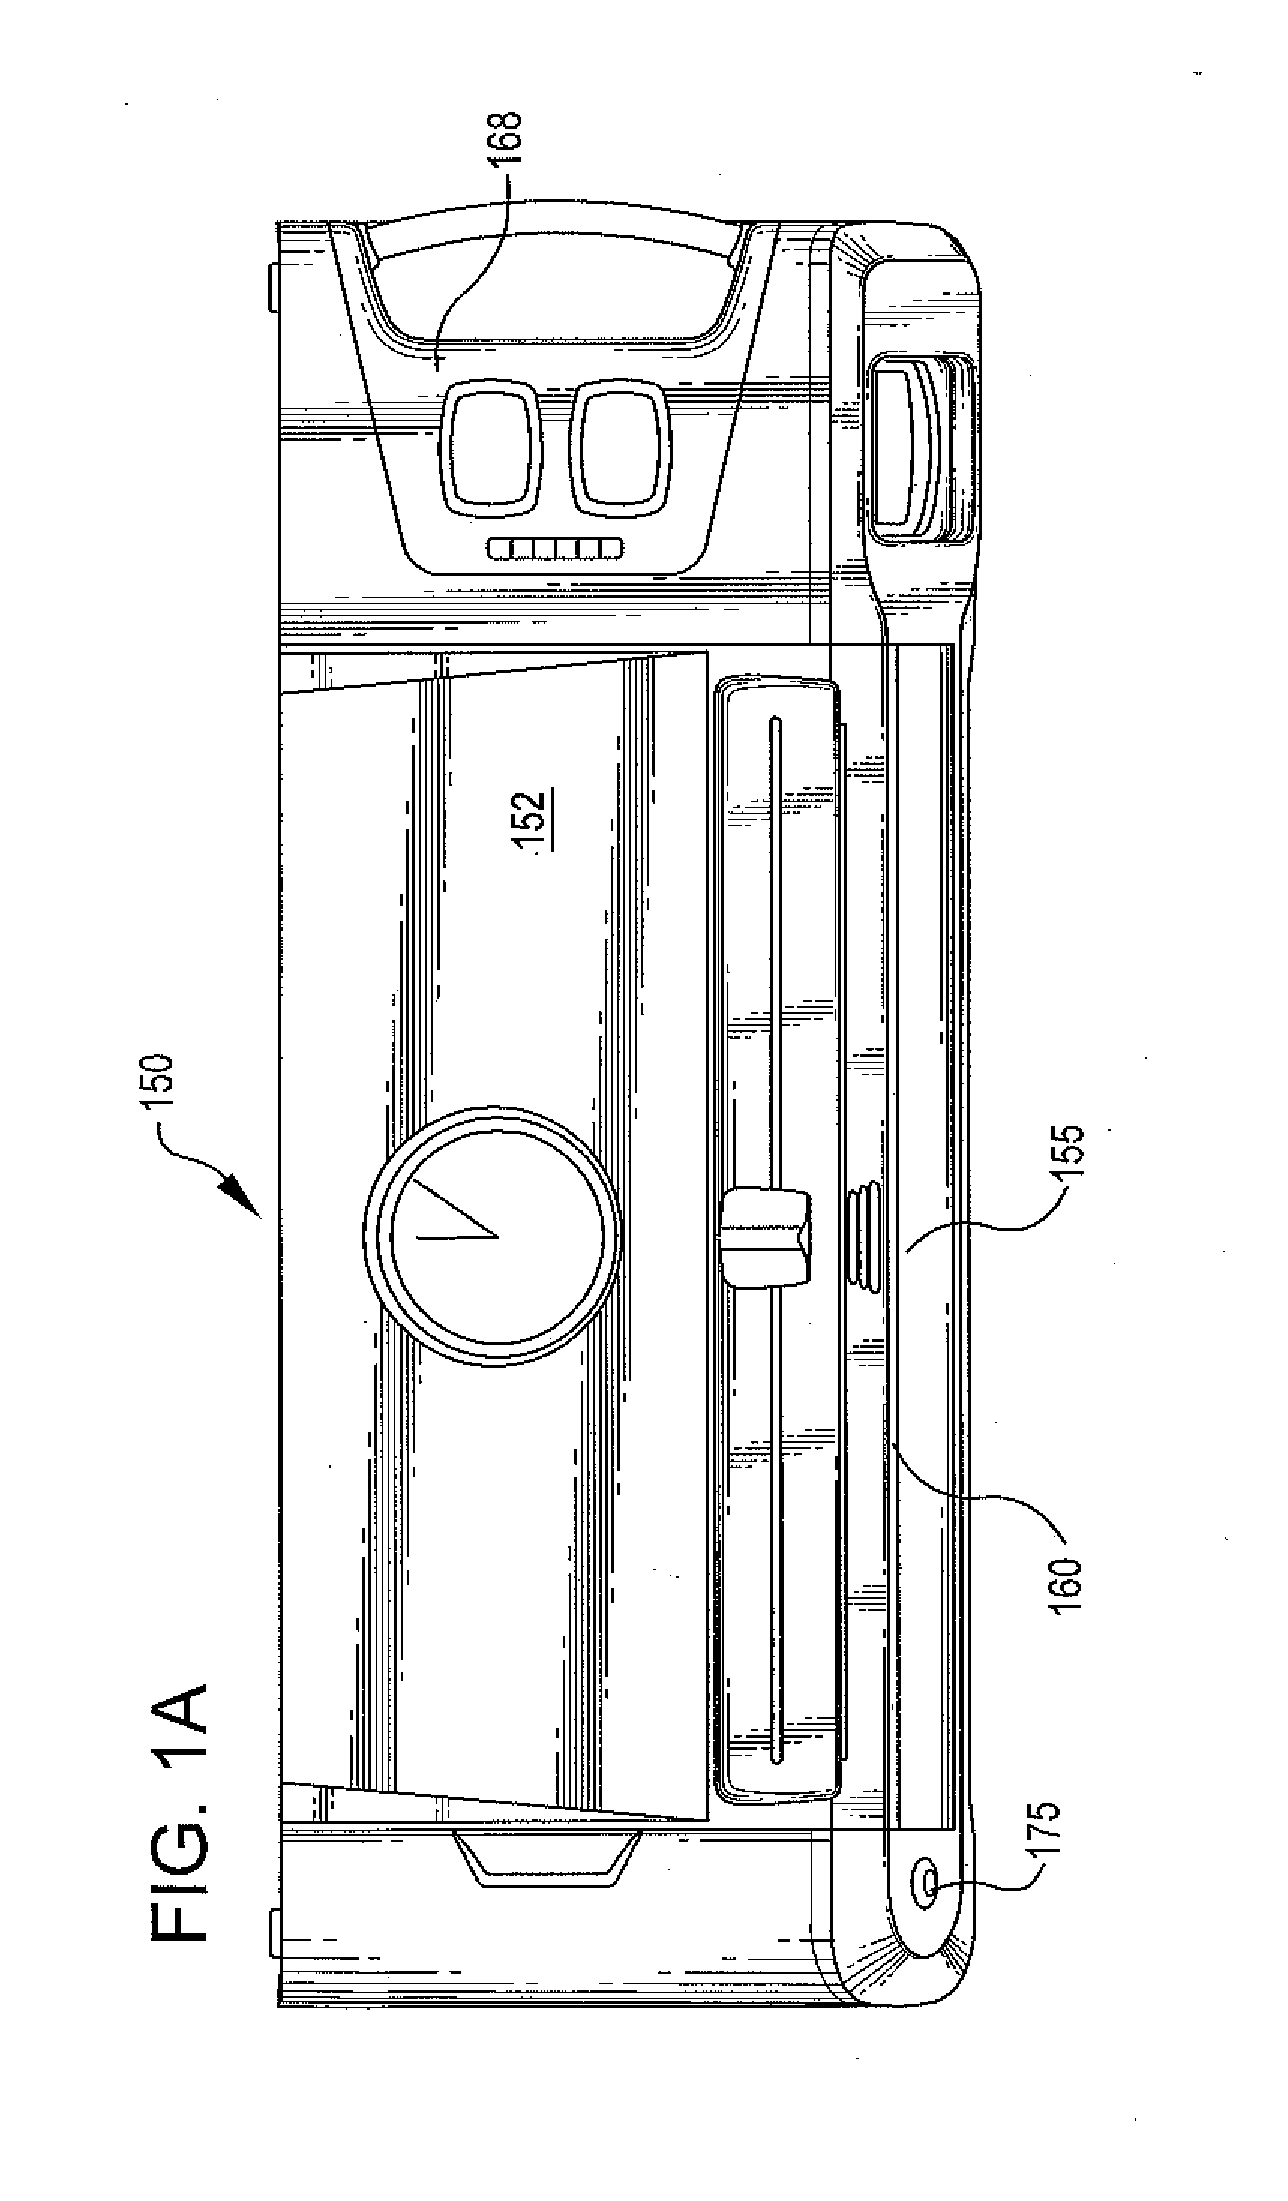 Heat sealer with algorithm for regulating sealing temperature